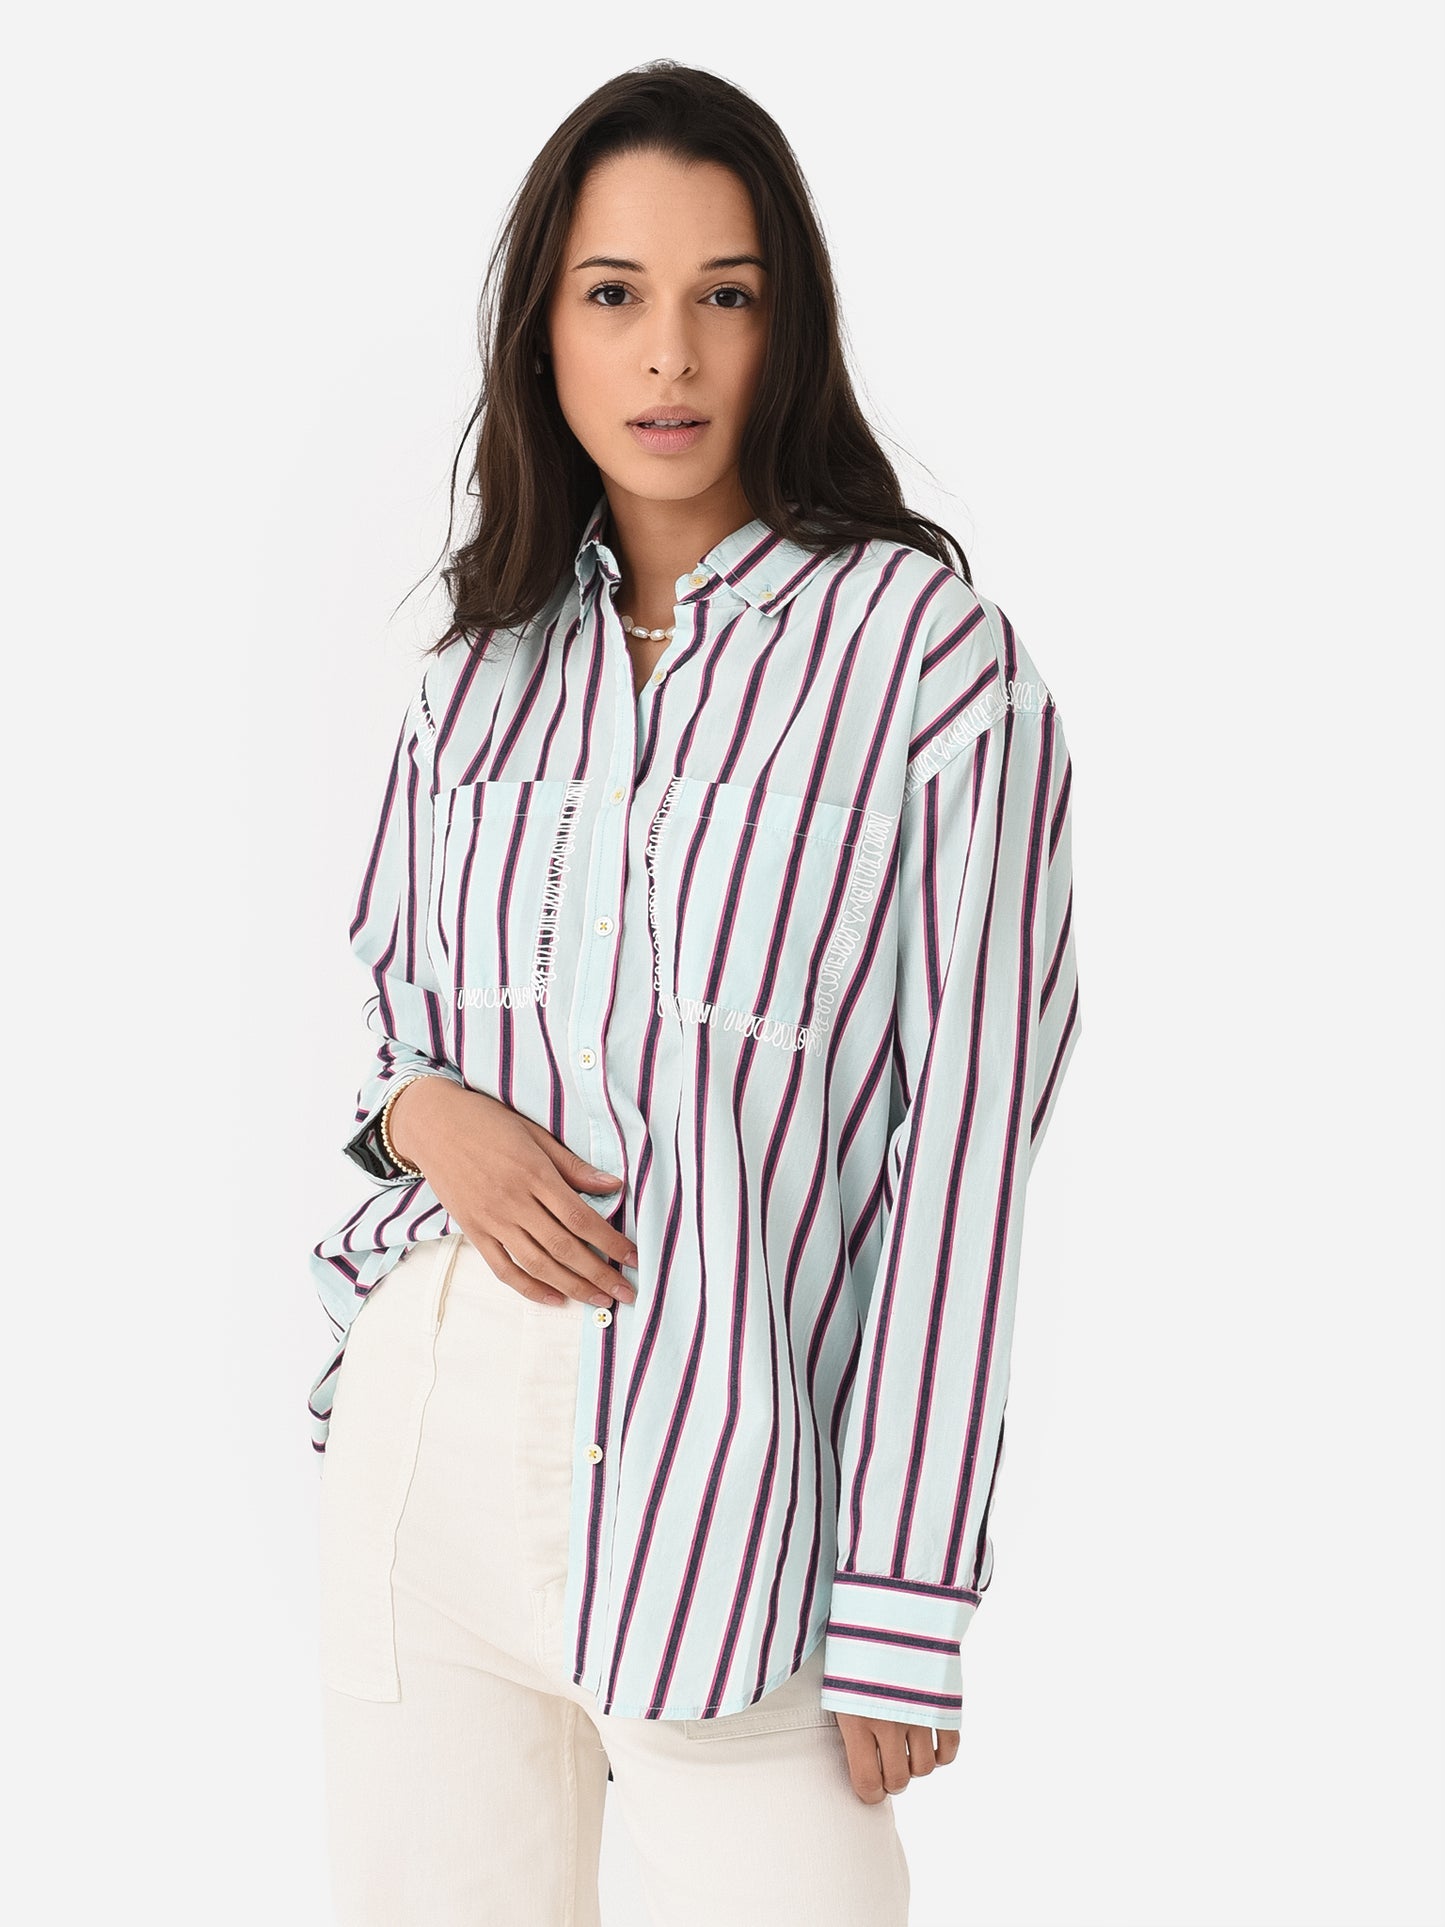 Kerri Rosenthal Women's Marti Striped Shirt